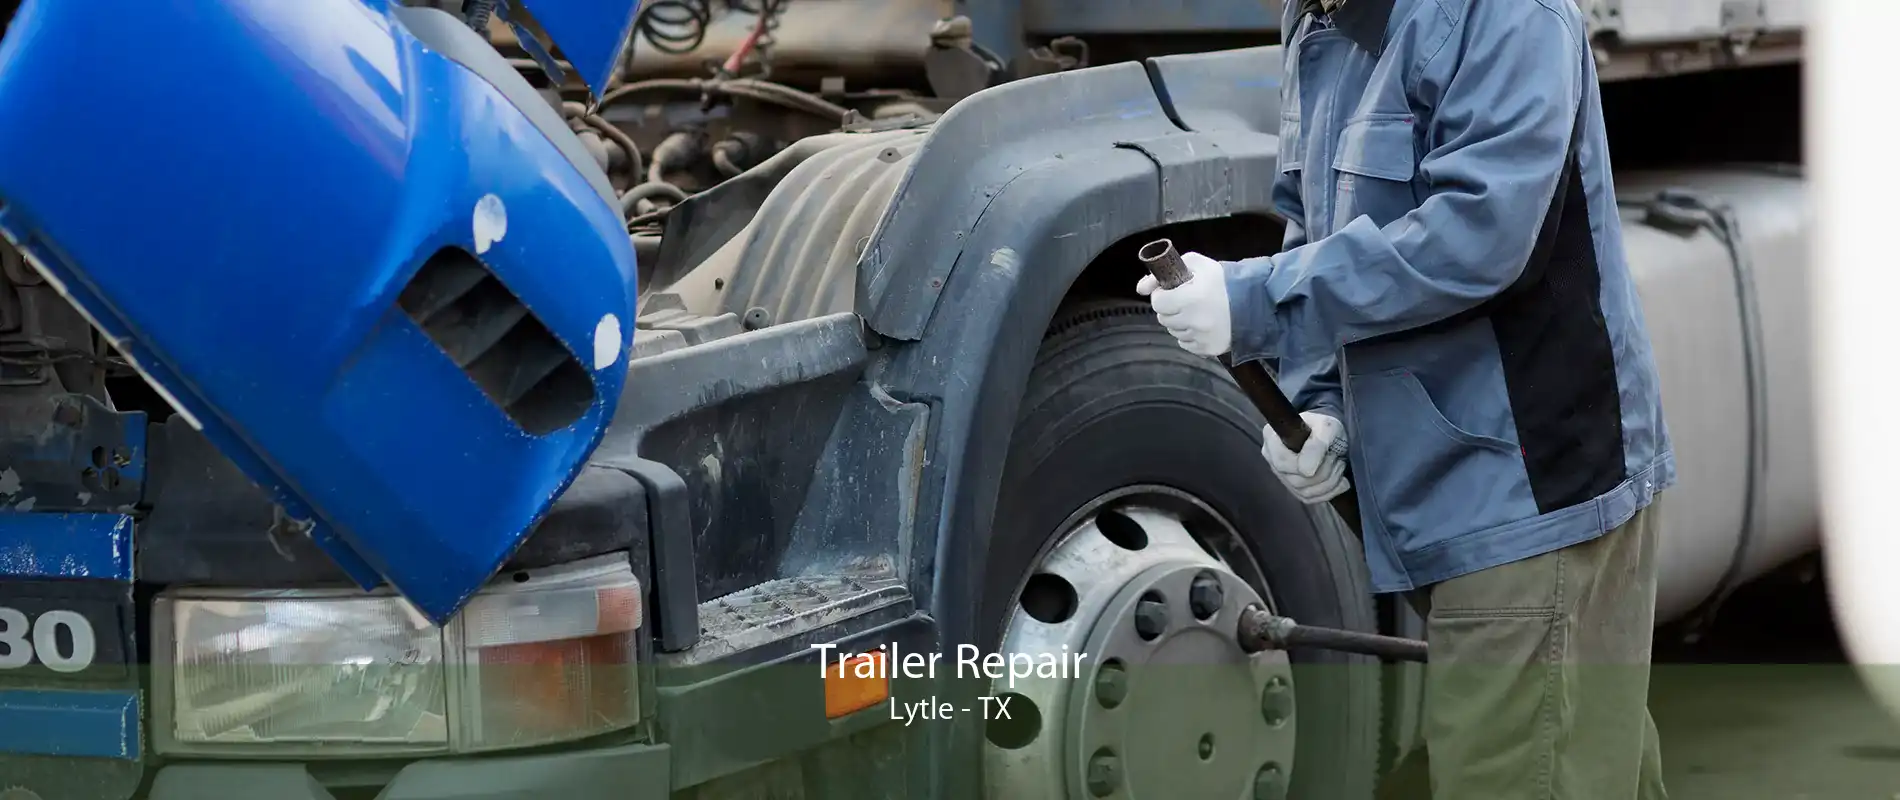 Trailer Repair Lytle - TX